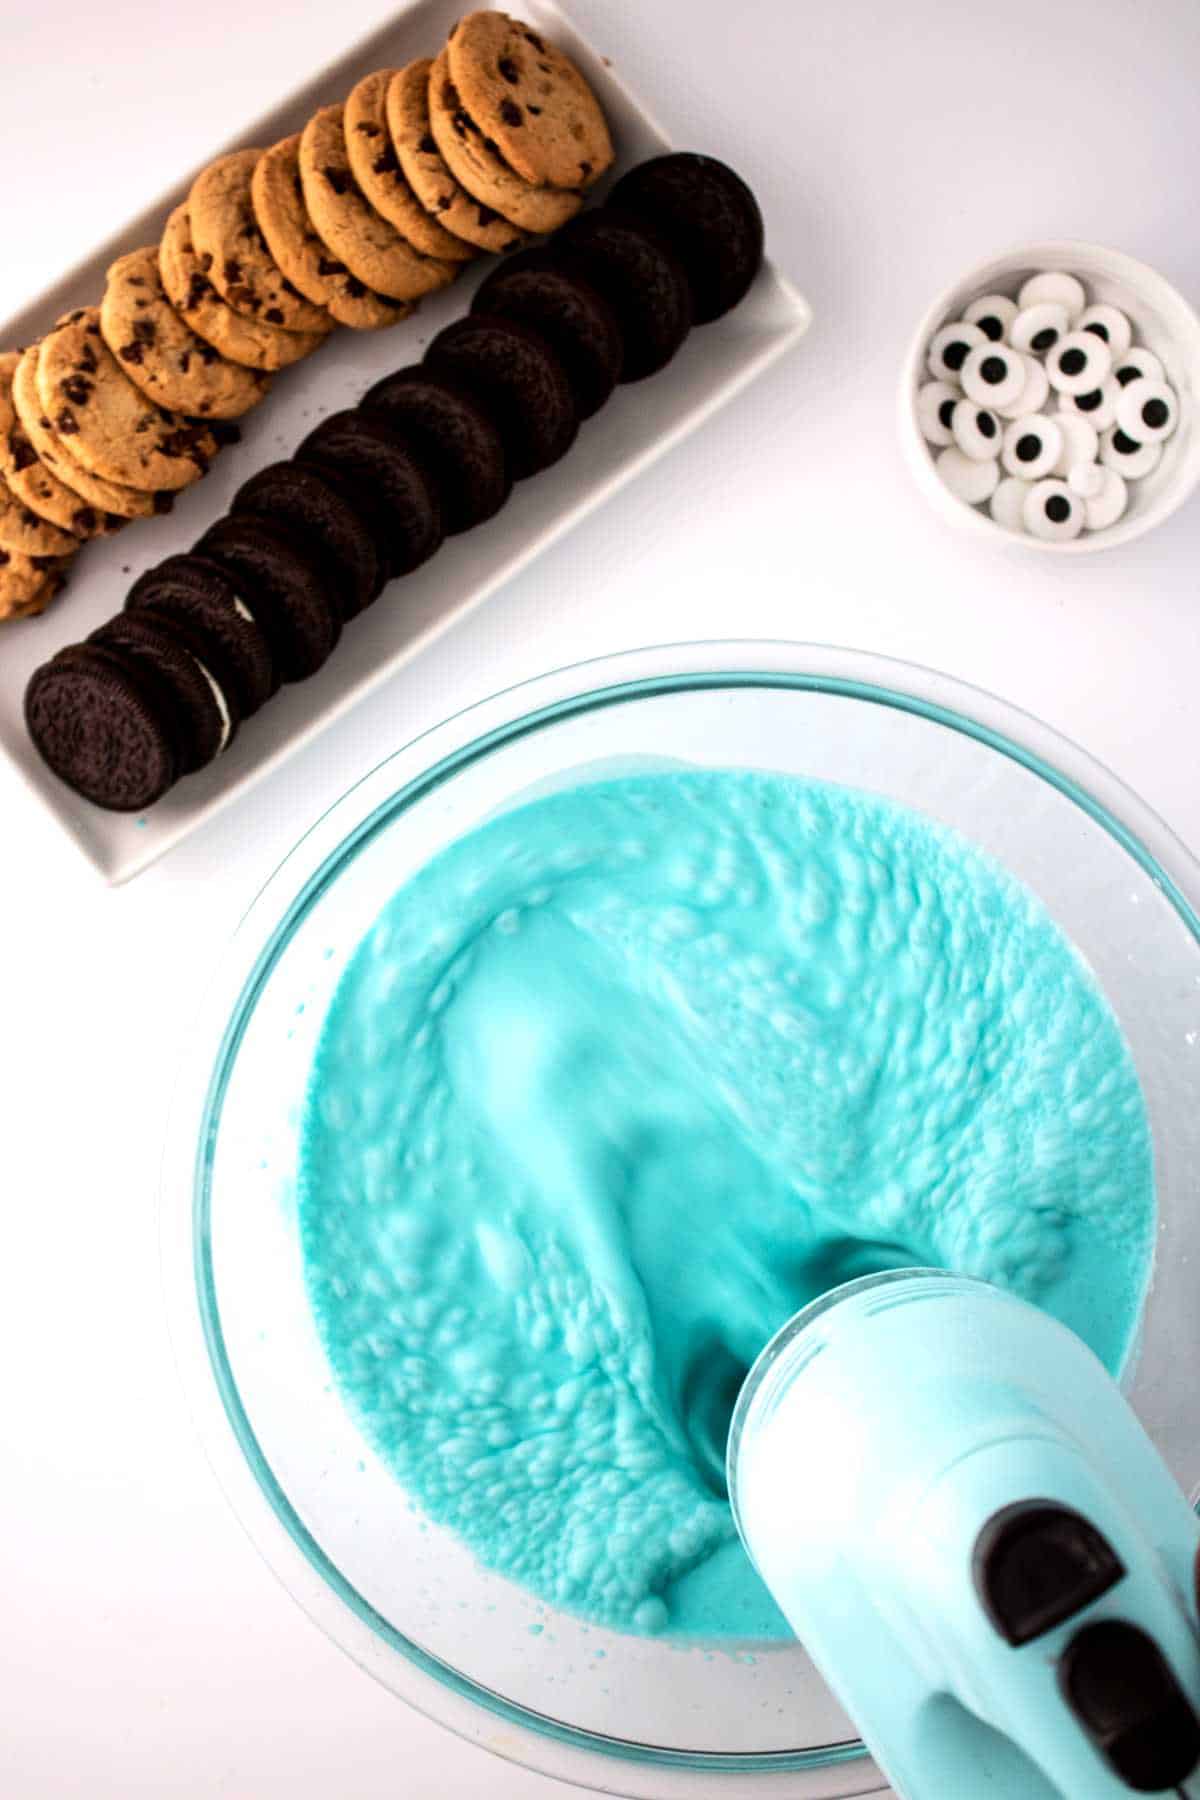 Mixer blending blue contents in a bowl.